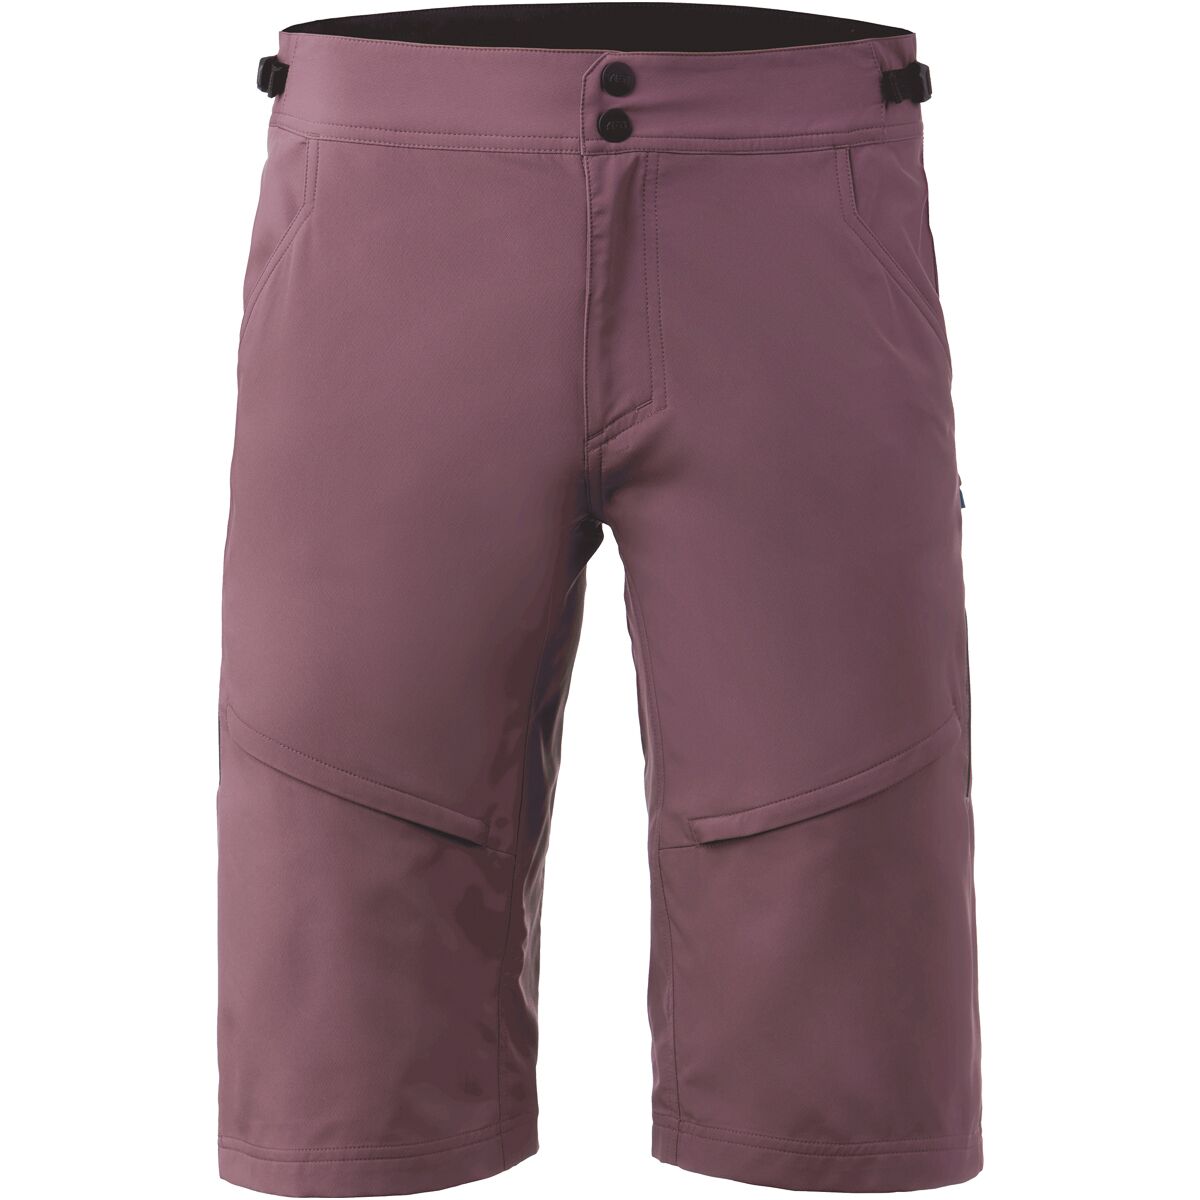 Yeti Cycles Freeland Short - Men's Dusty Purple, L